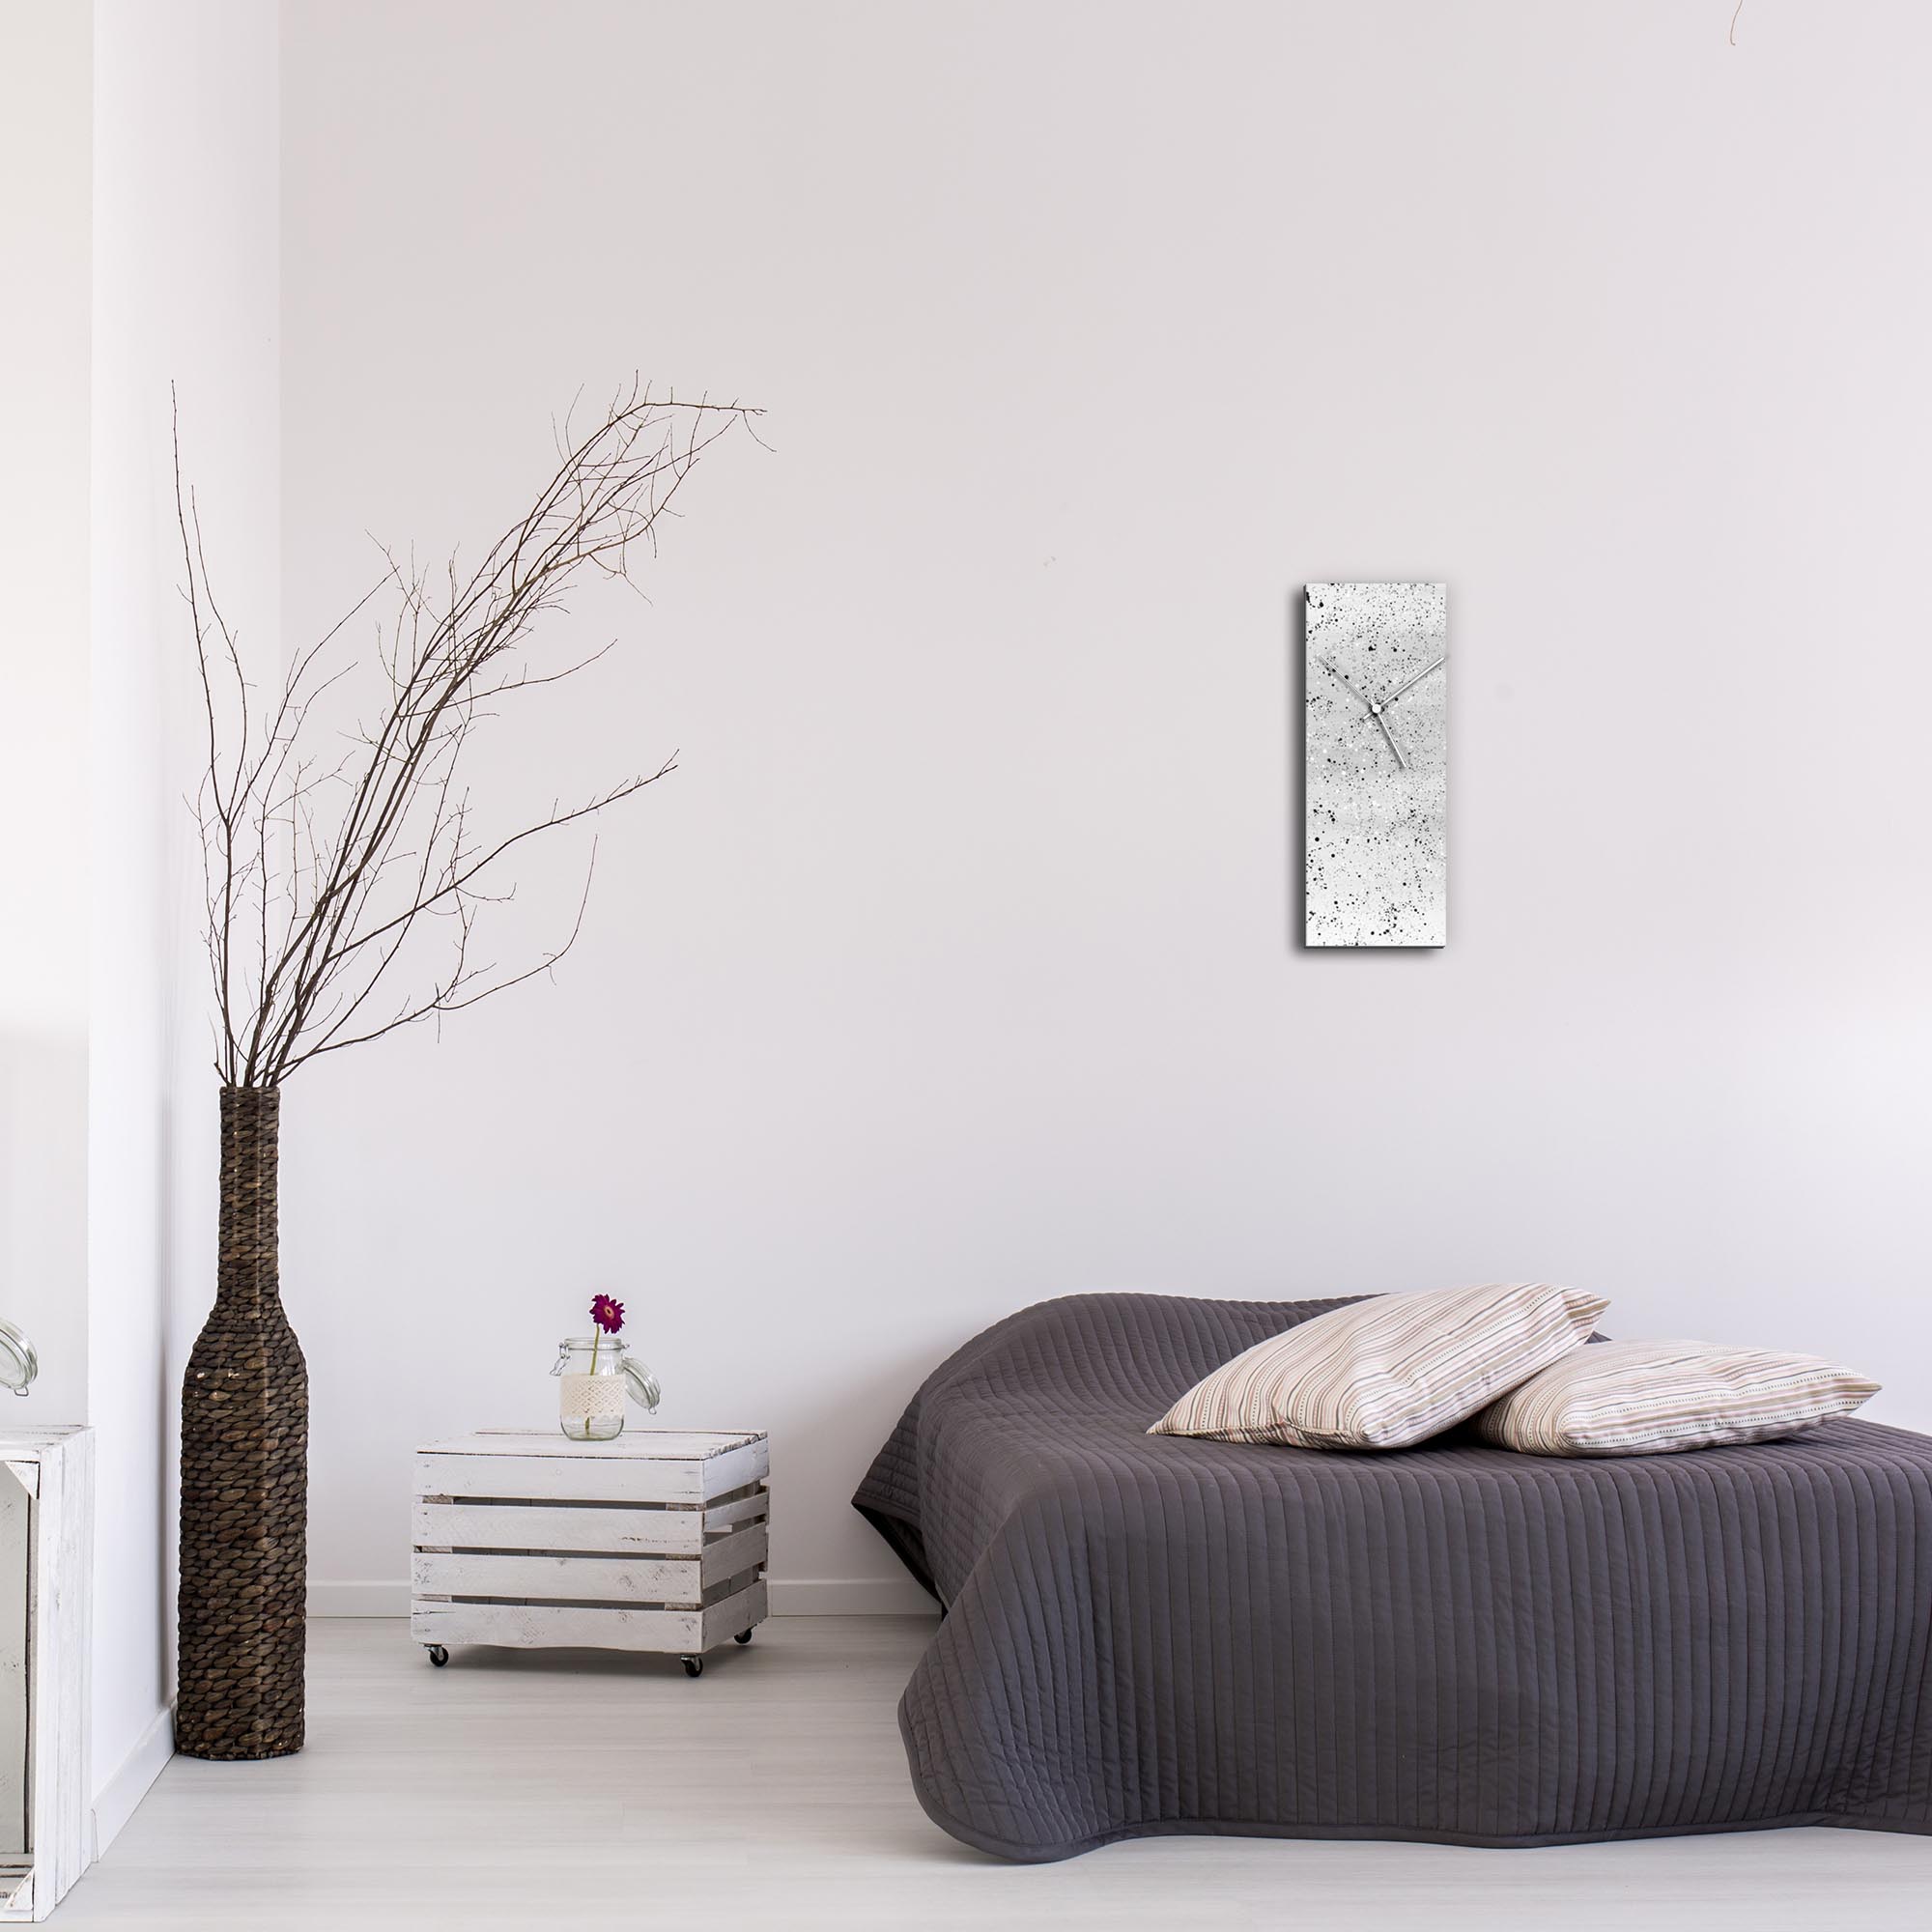 White Flecked Clock by Mendo Vasilevski - Urban Abstract Home Decor - Lifestyle View